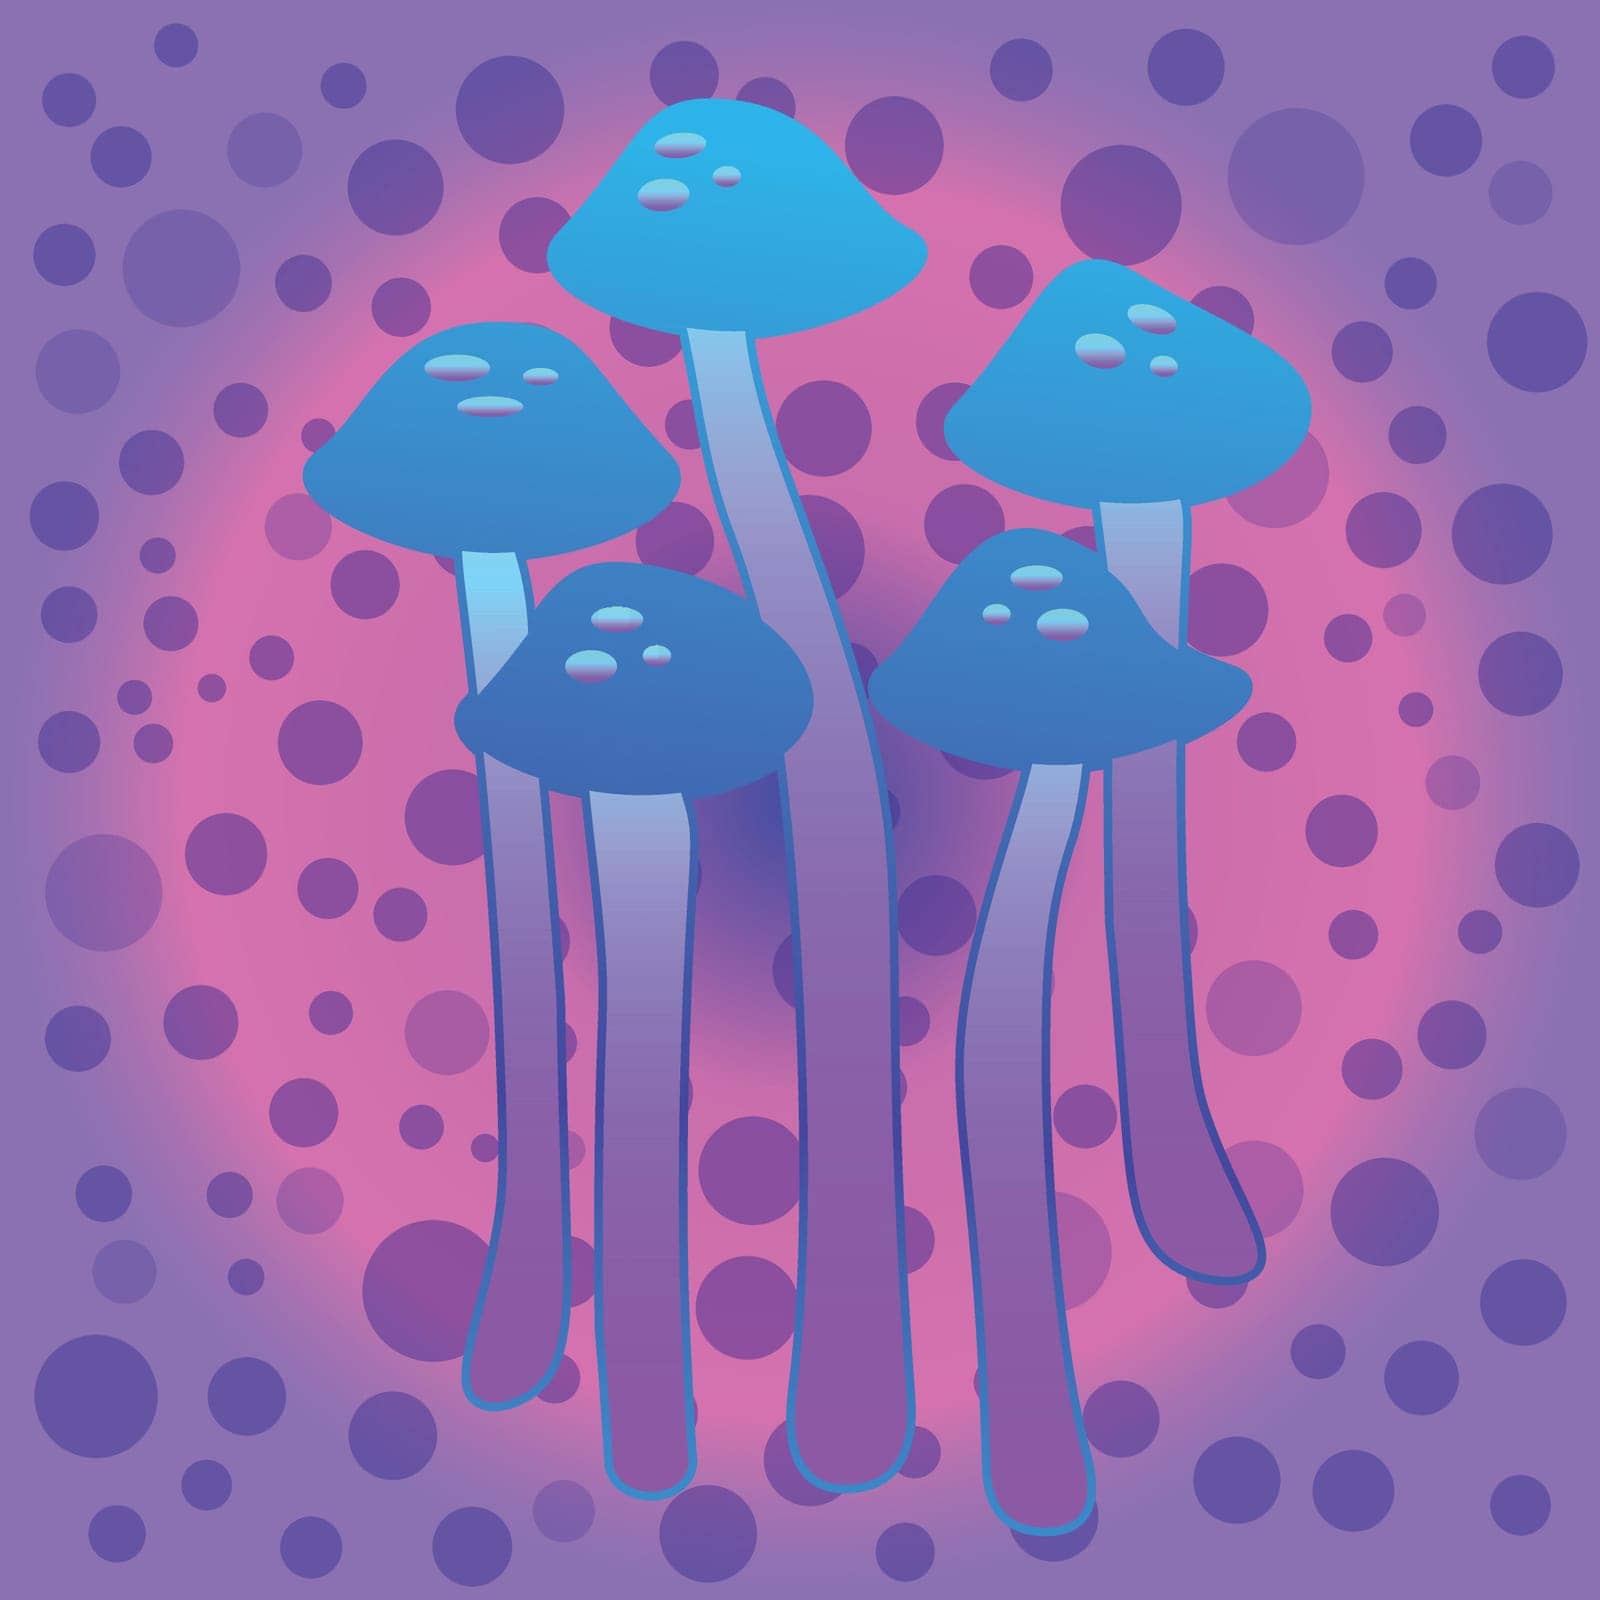 Magic mushroom. Psychedelic hallucination. Vibrant vector illustration. 60s hippie colorful art.